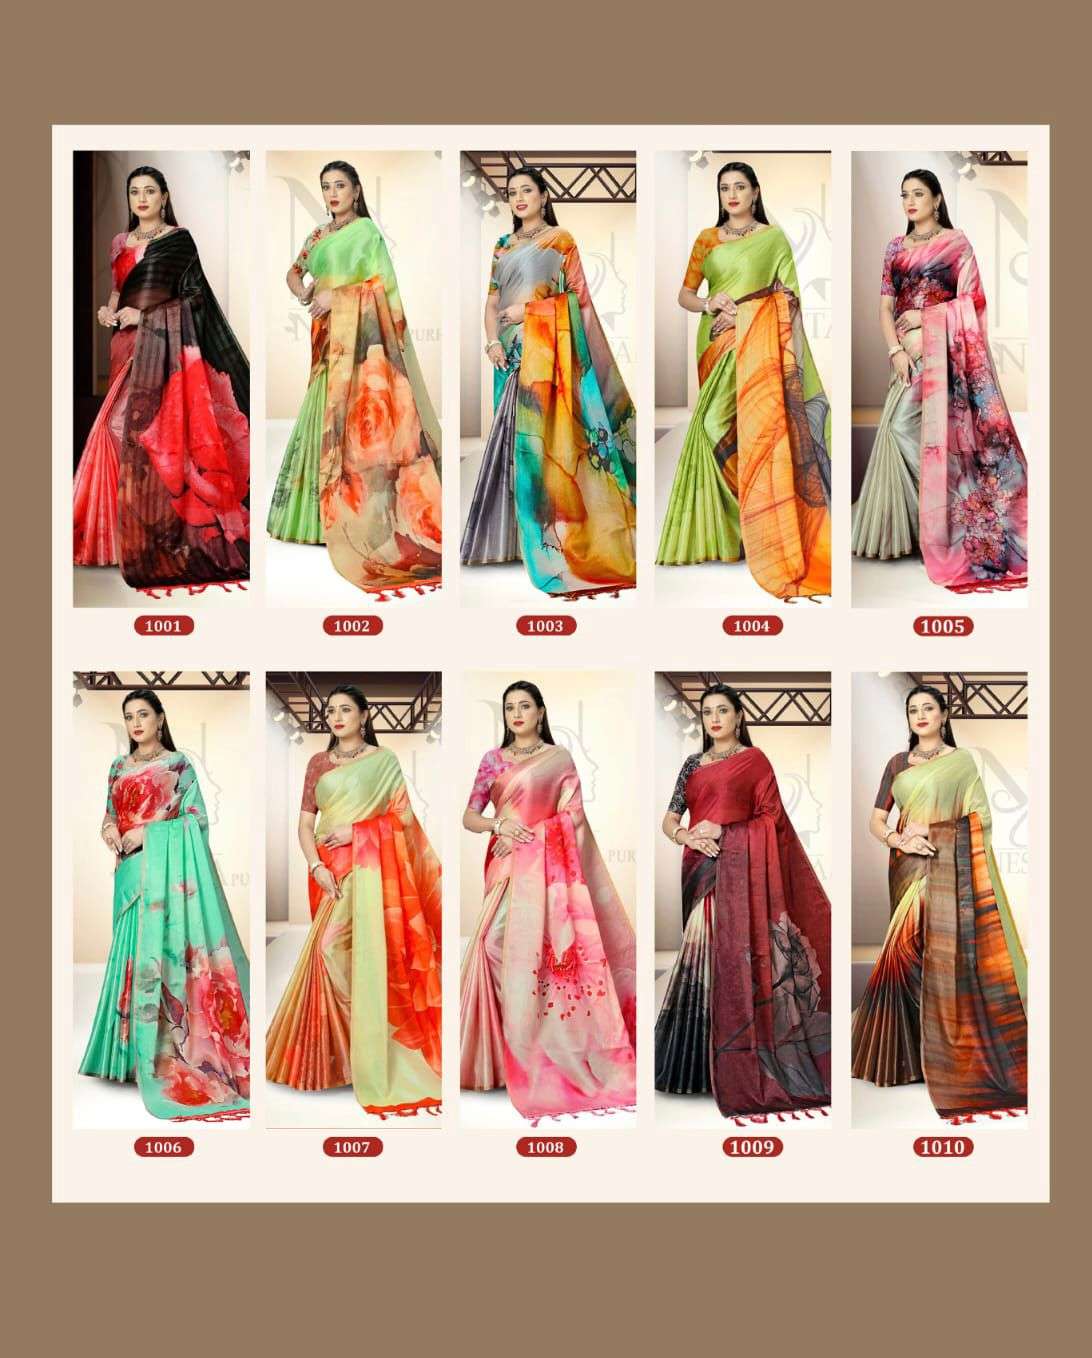 Style Sutra By Nestsa Designer Wholesale Online Sarees Set